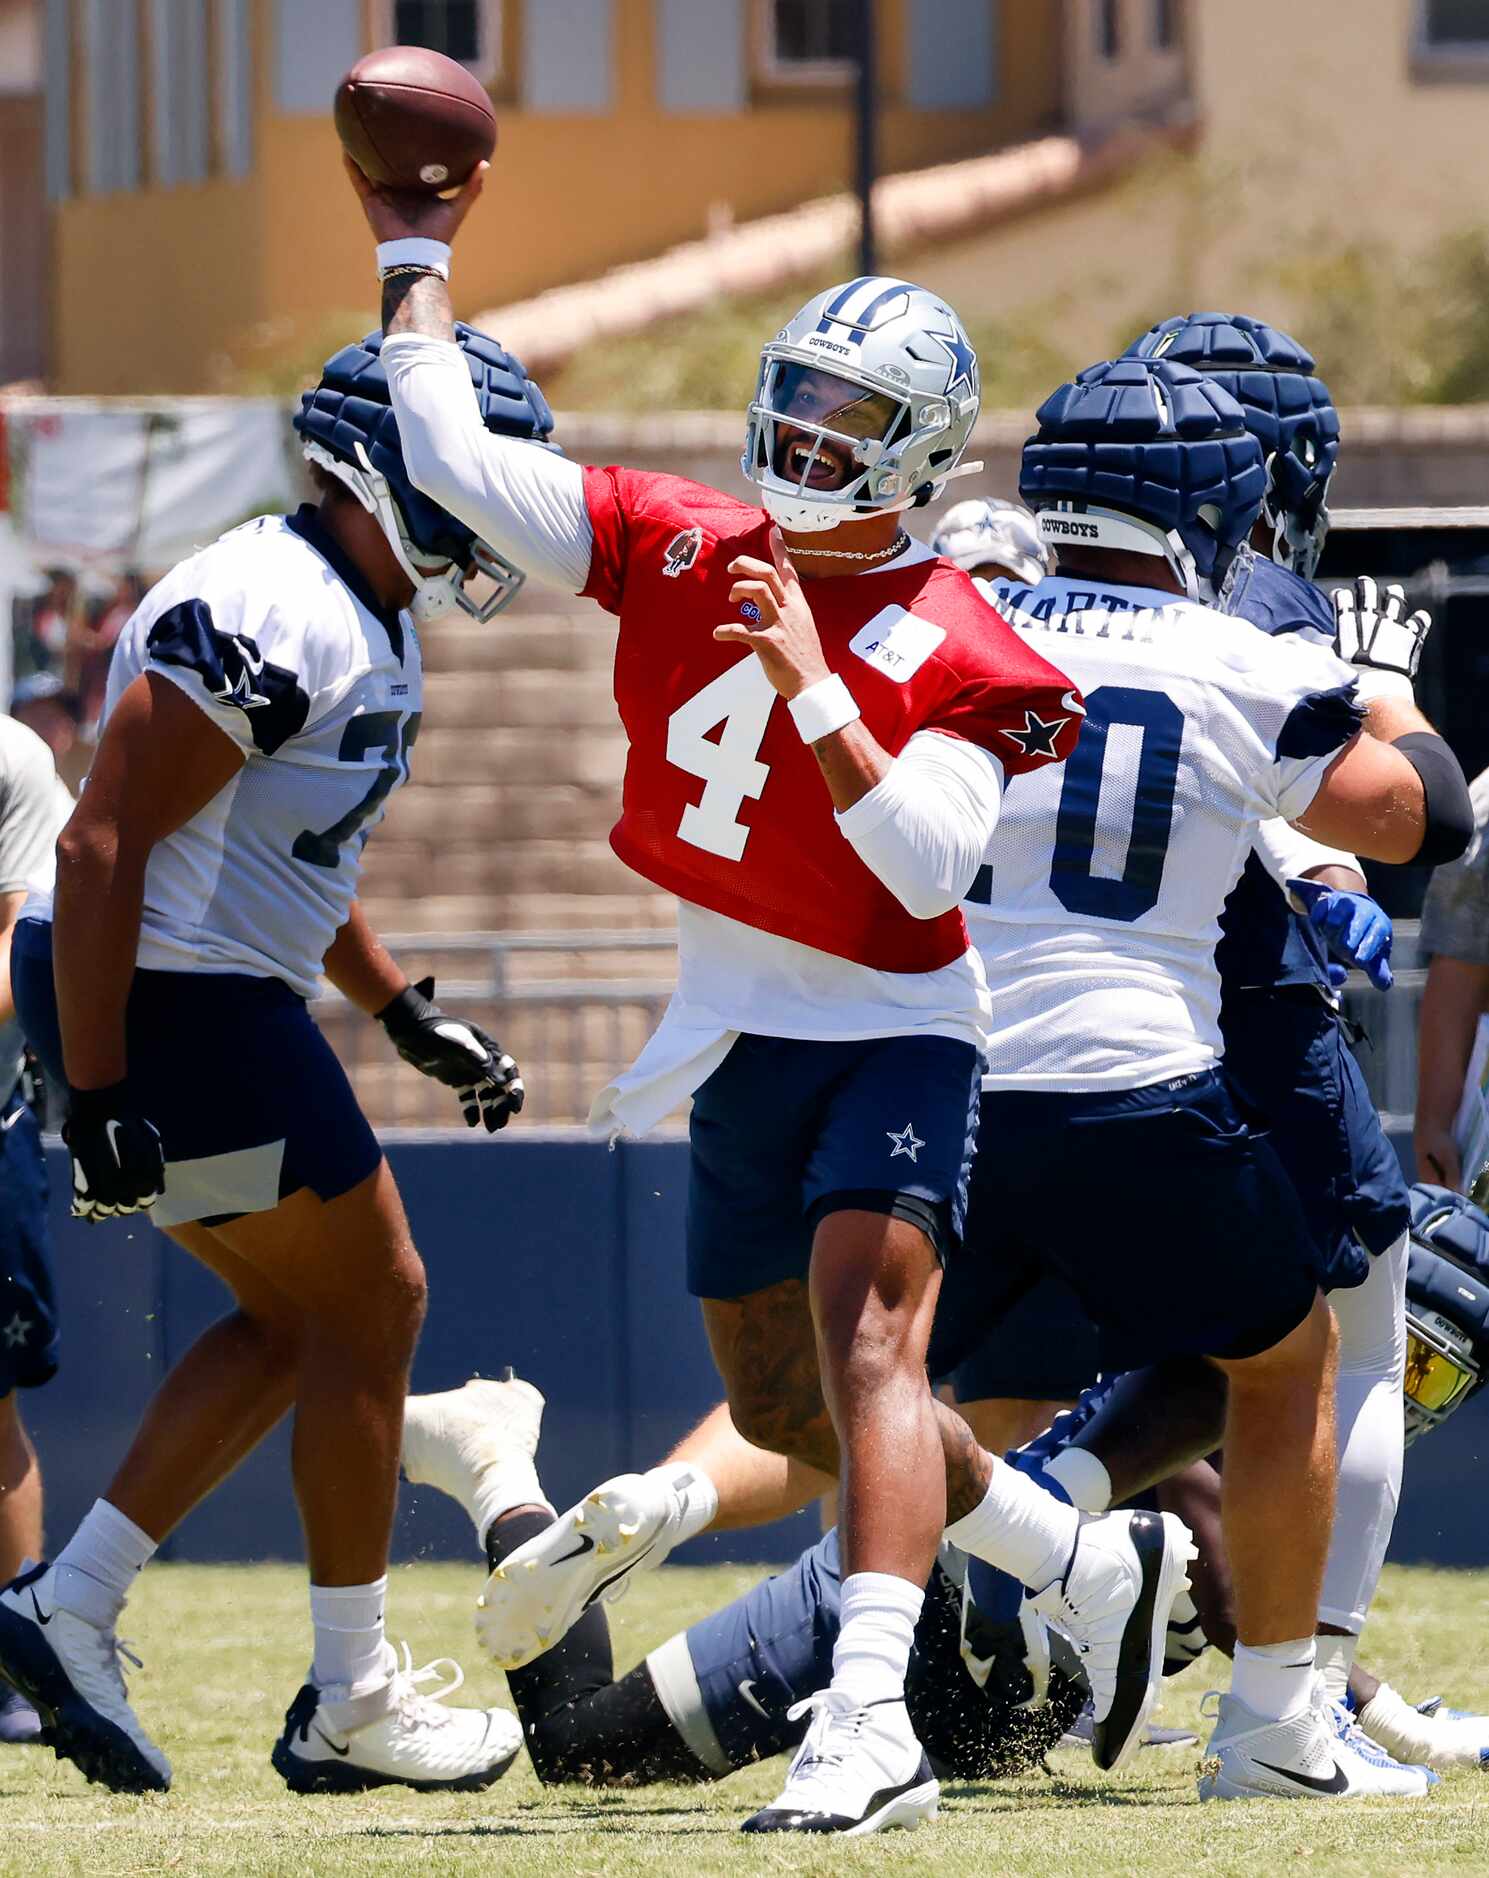 Dallas Cowboys quarterback Dak Prescott (4) fires a pass during a training camp practice in...